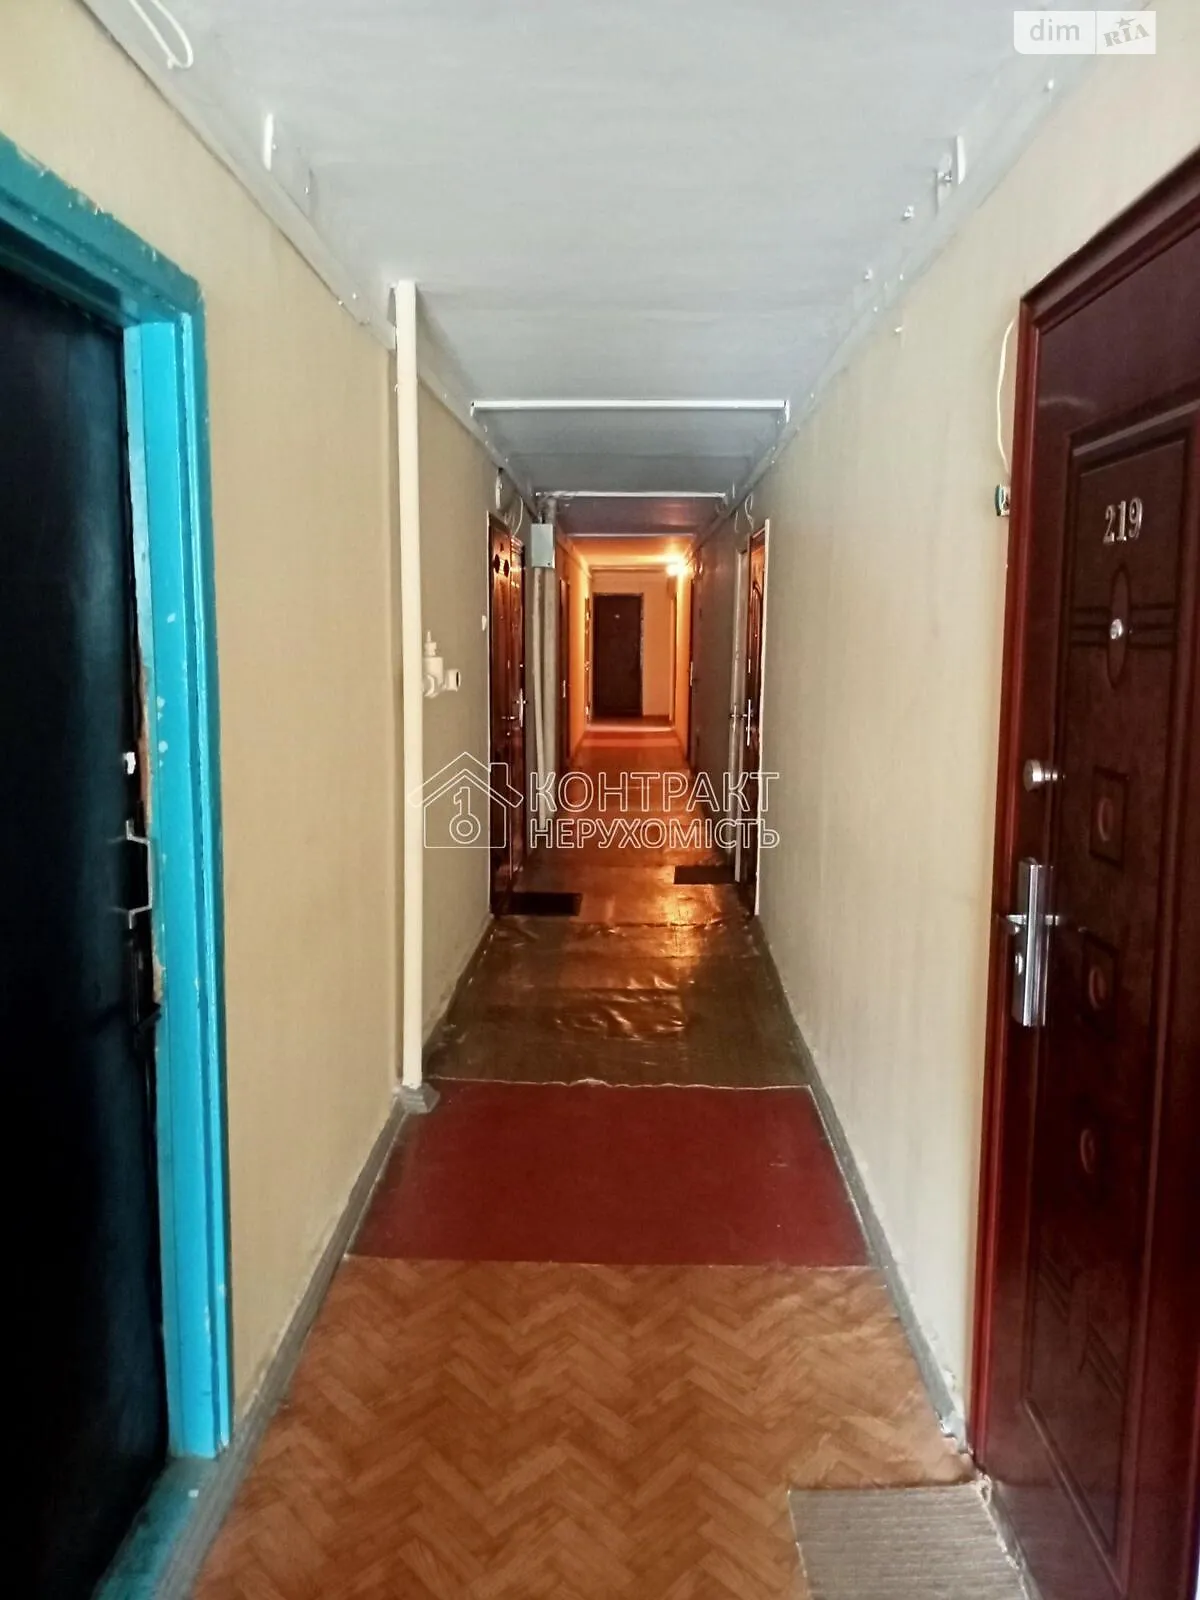 Продается комната 20.5 кв. м в Харькове - фото 3